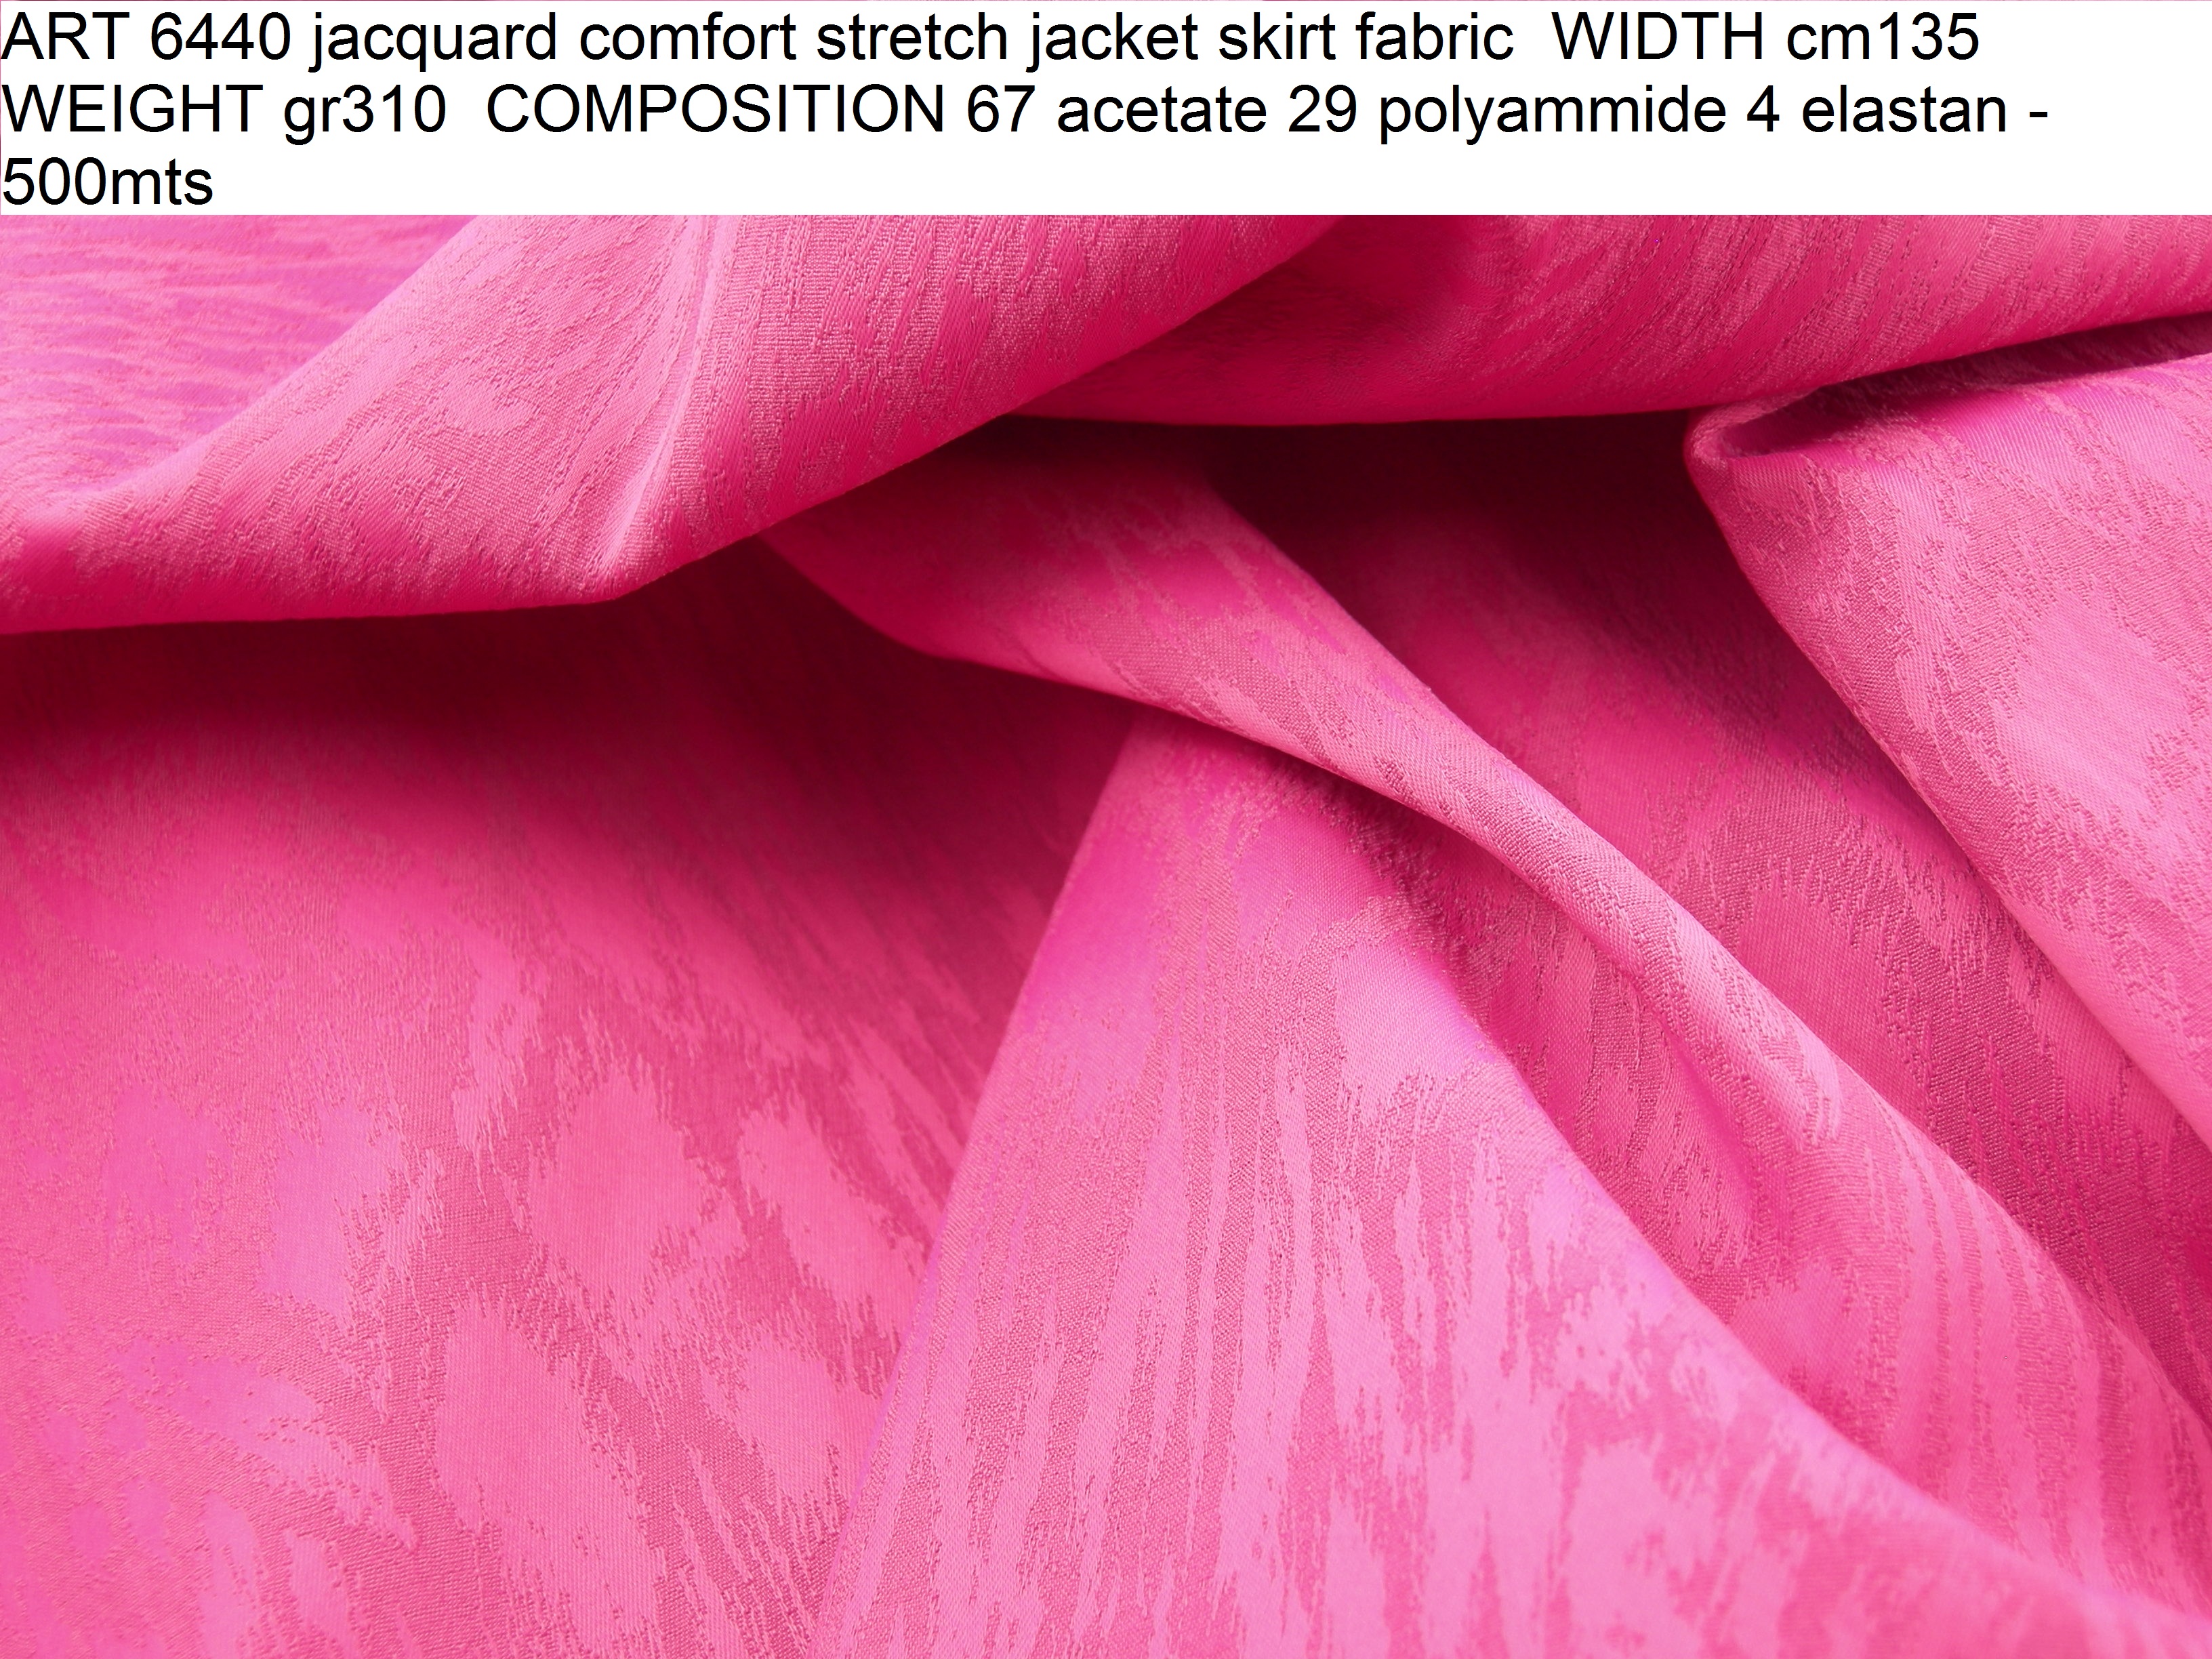 ART 6440 jacquard comfort stretch jacket skirt fabric WIDTH cm135 WEIGHT gr310 COMPOSITION 67 acetate 29 polyammide 4 elastan - 500mts